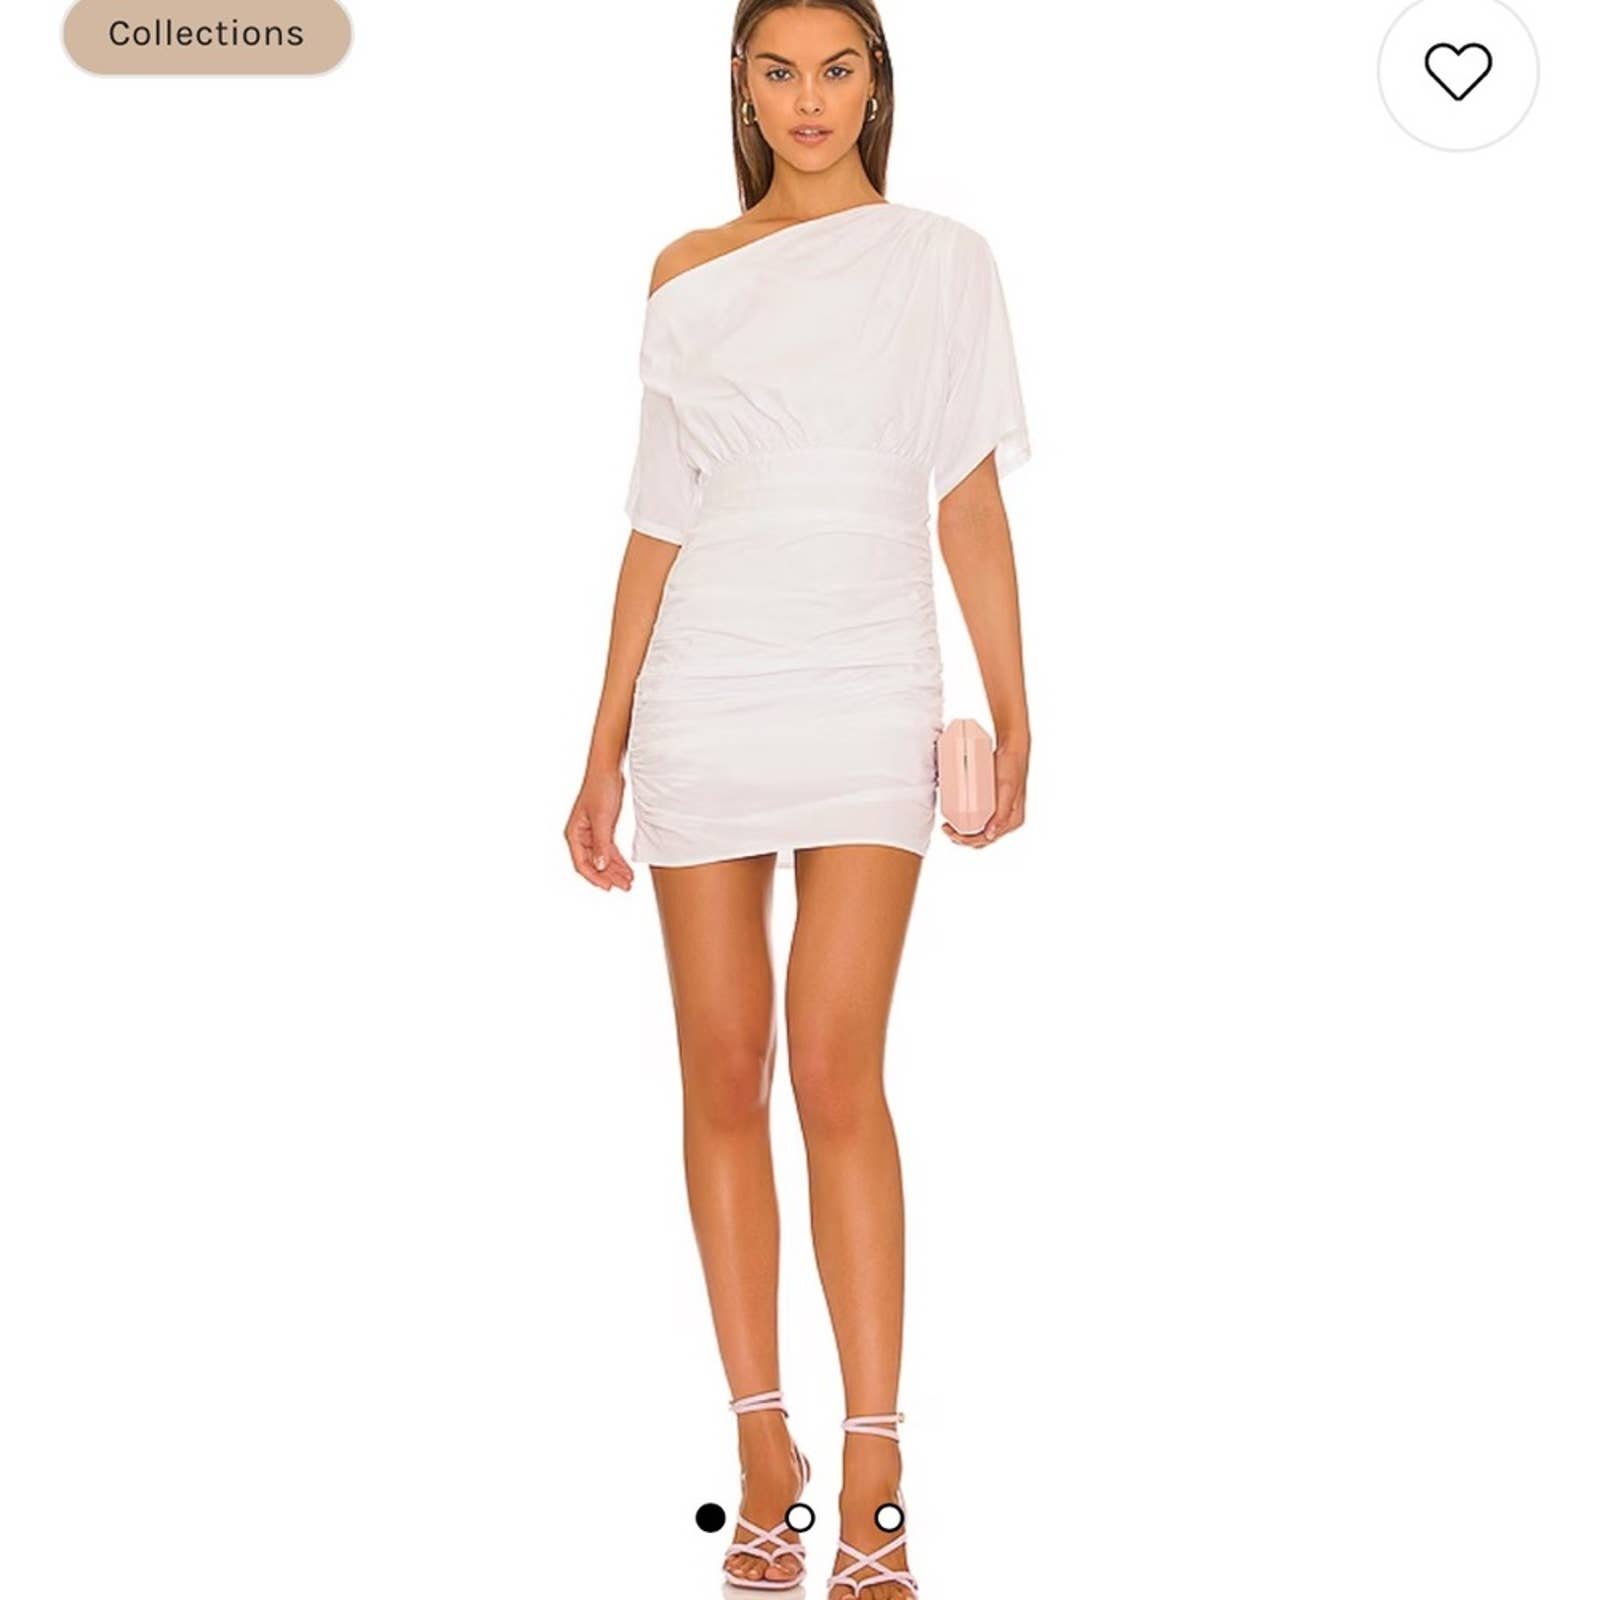 Nwt Rhode Maya Dress in White sz 2 #E2 D48FuXt9P